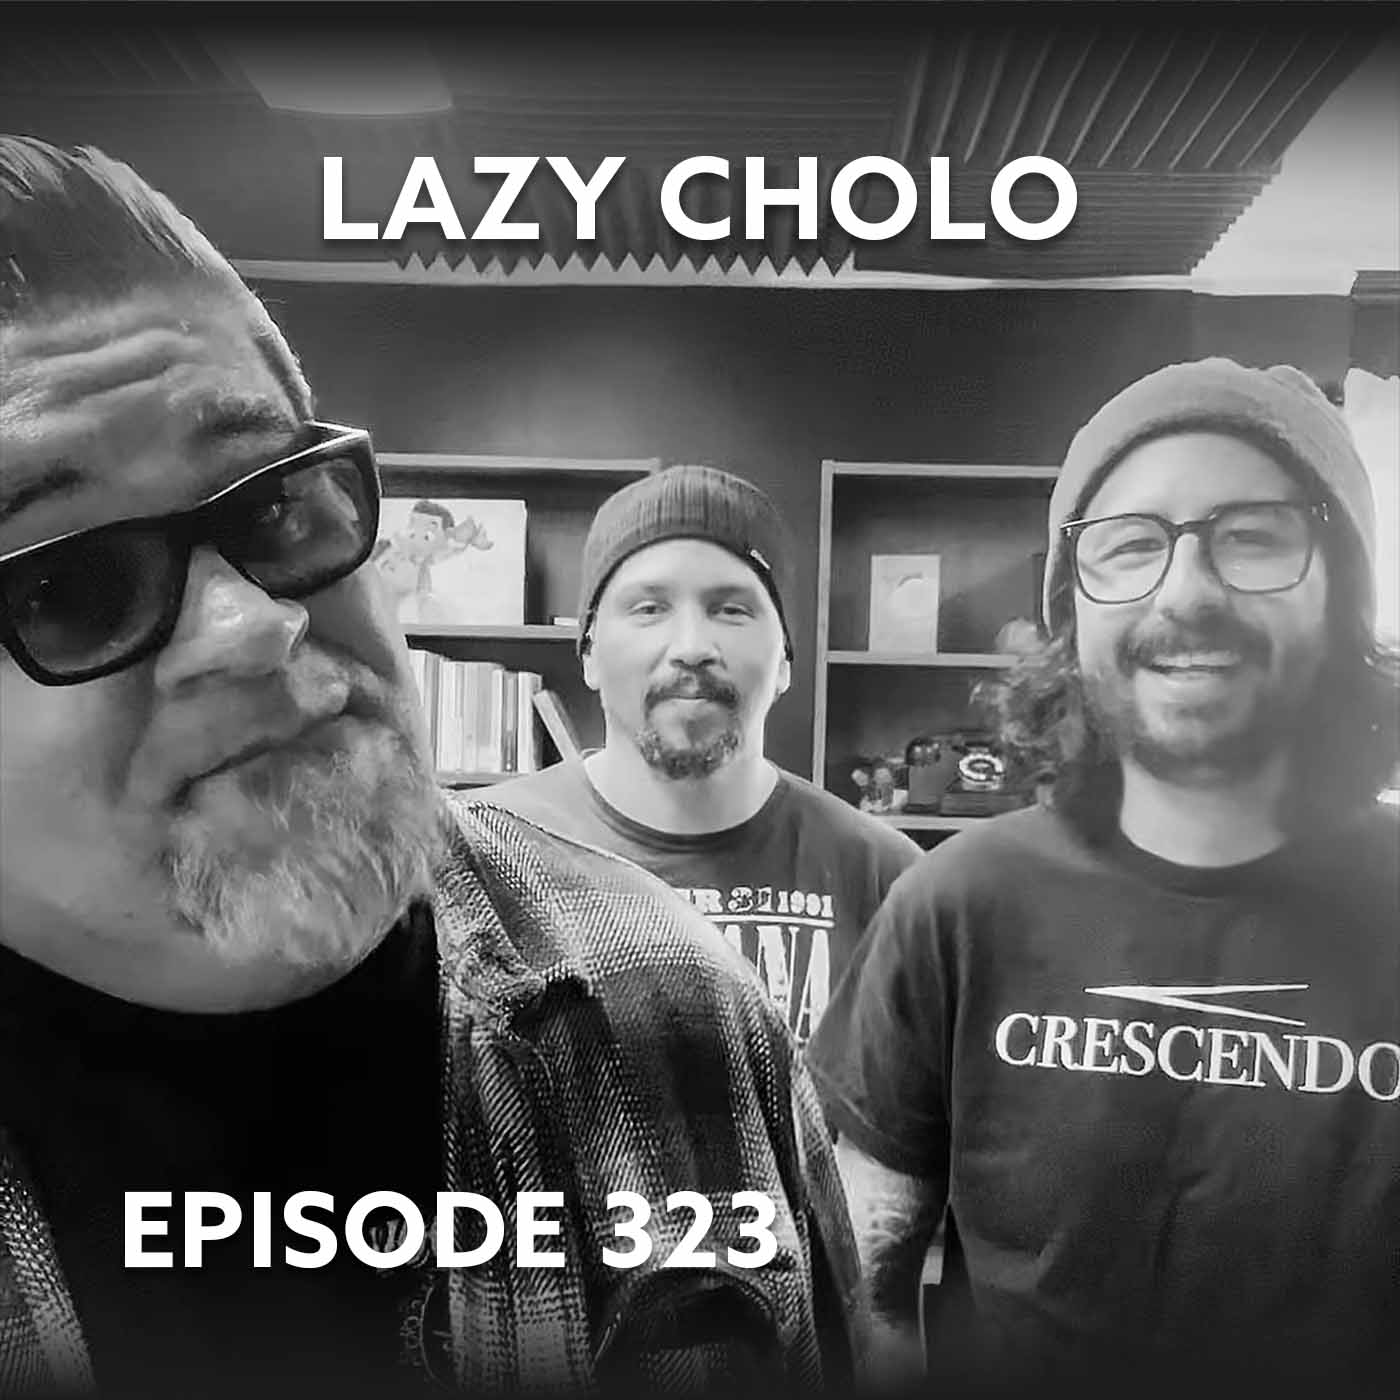 Episode 323 – Lazy Cholo